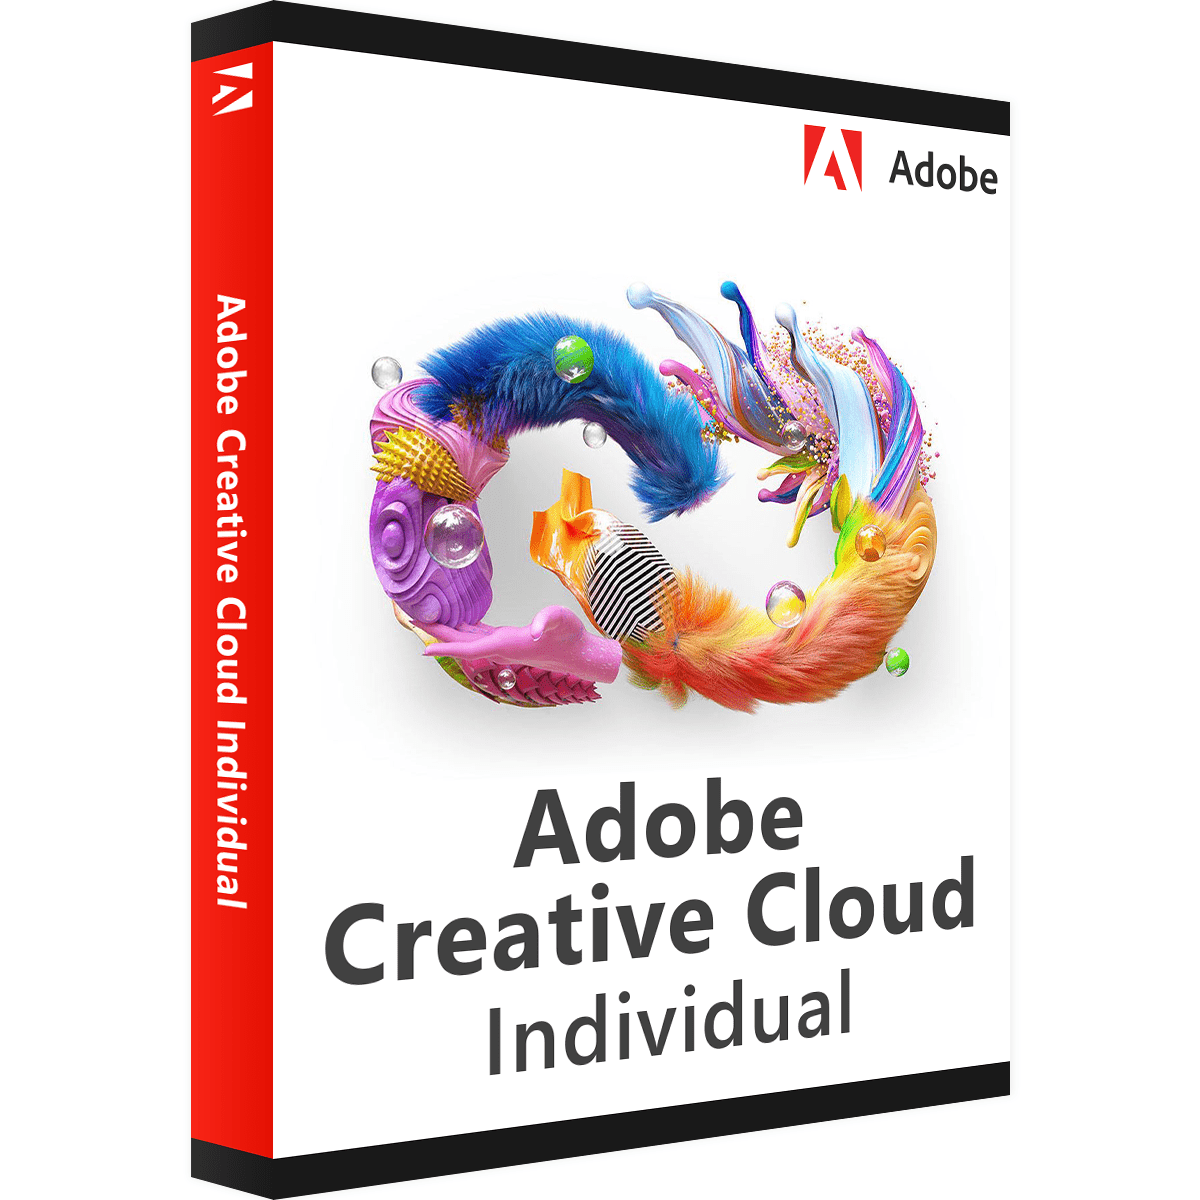 Adobe_Creative_Cloud_Individual_01.png